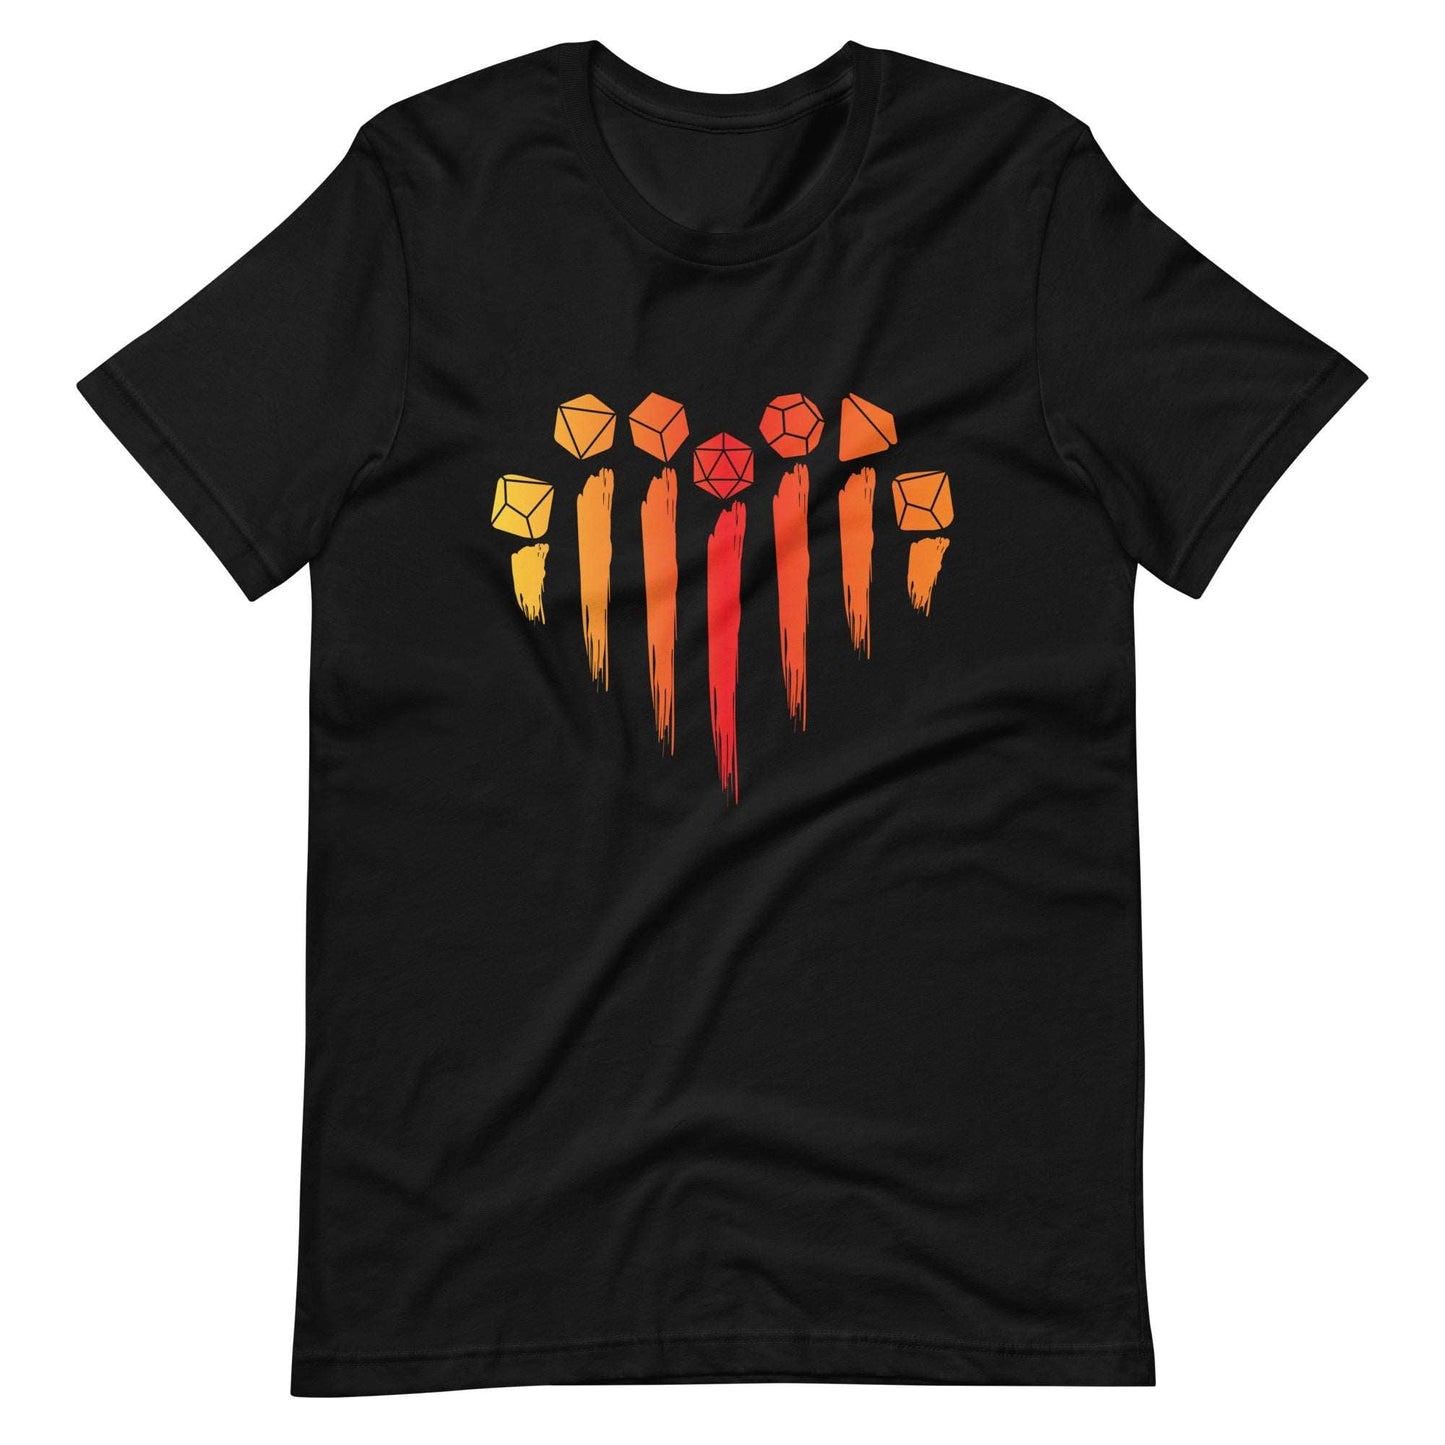 DnD Dice Heart T-Shirt - I Love Dungeons & Dragons Shirt T-Shirt Black / S